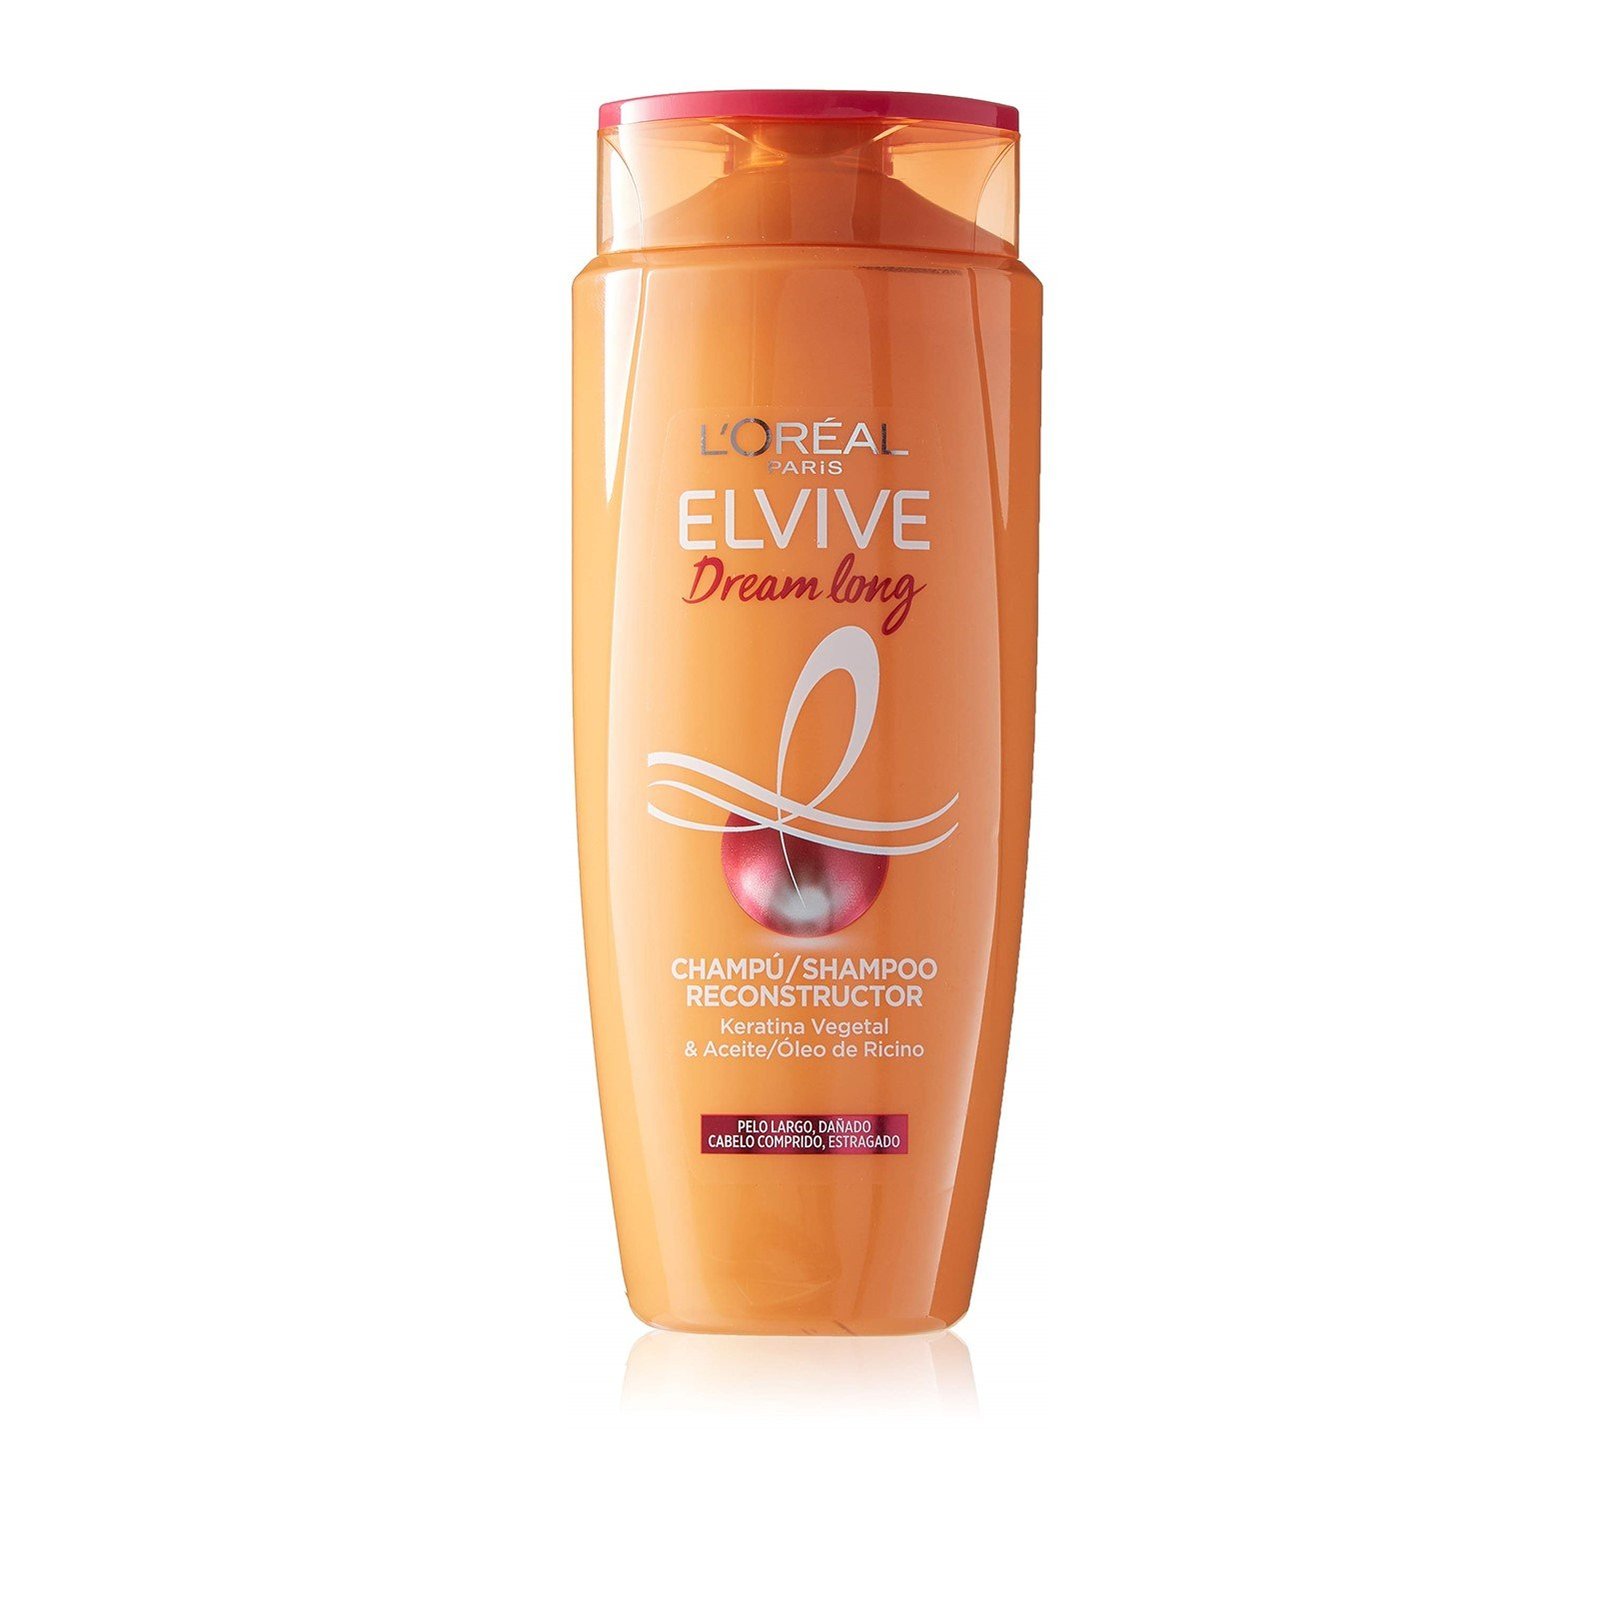 L'Oréal Paris Elvive Dream Long Shampoo 700ml (23.67 fl oz)